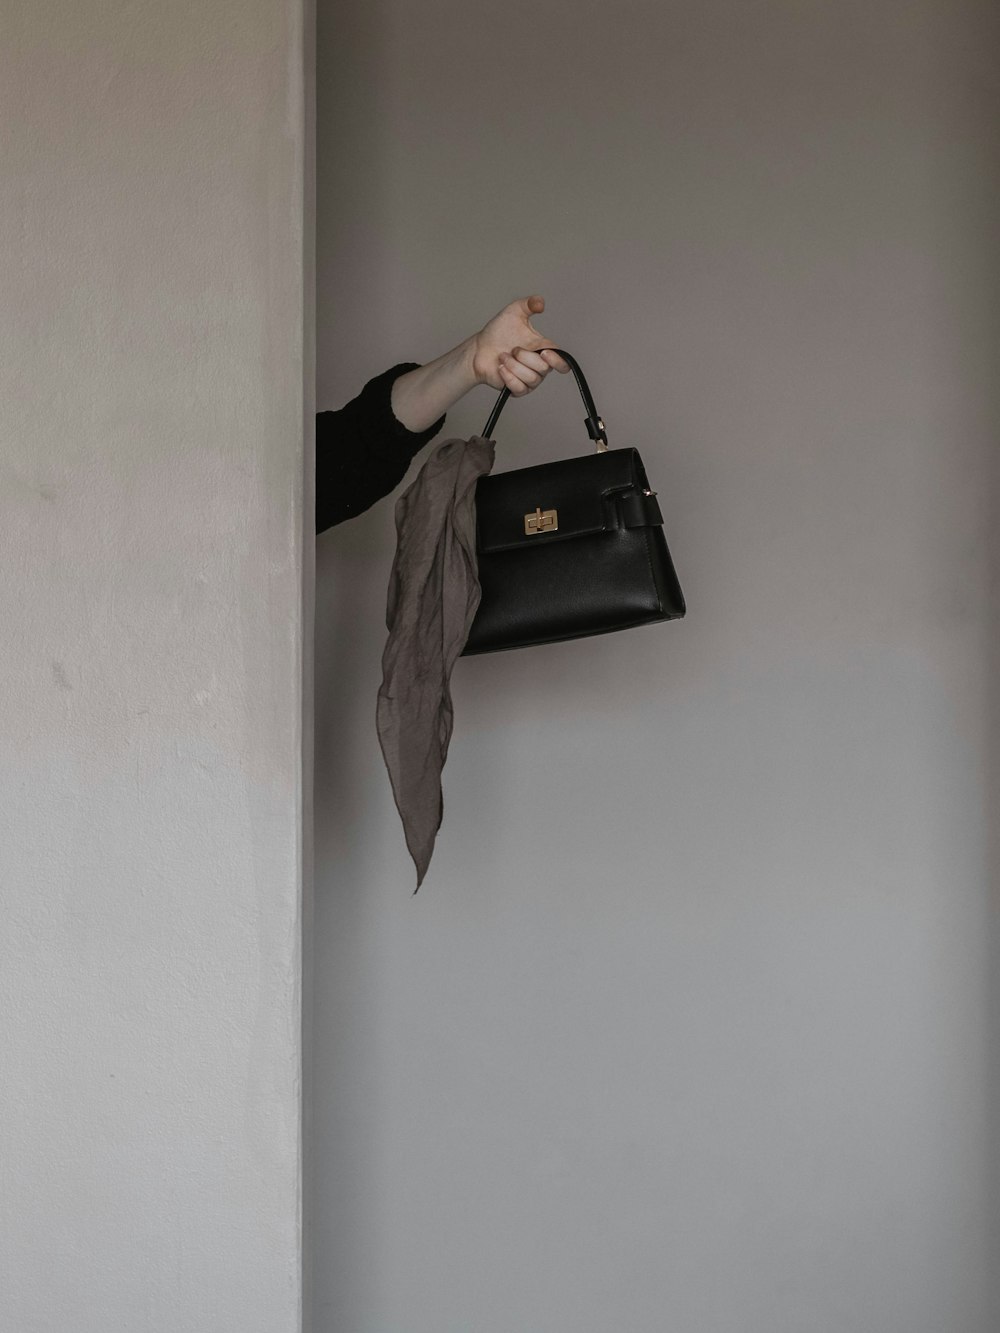 person holding black leather handbag